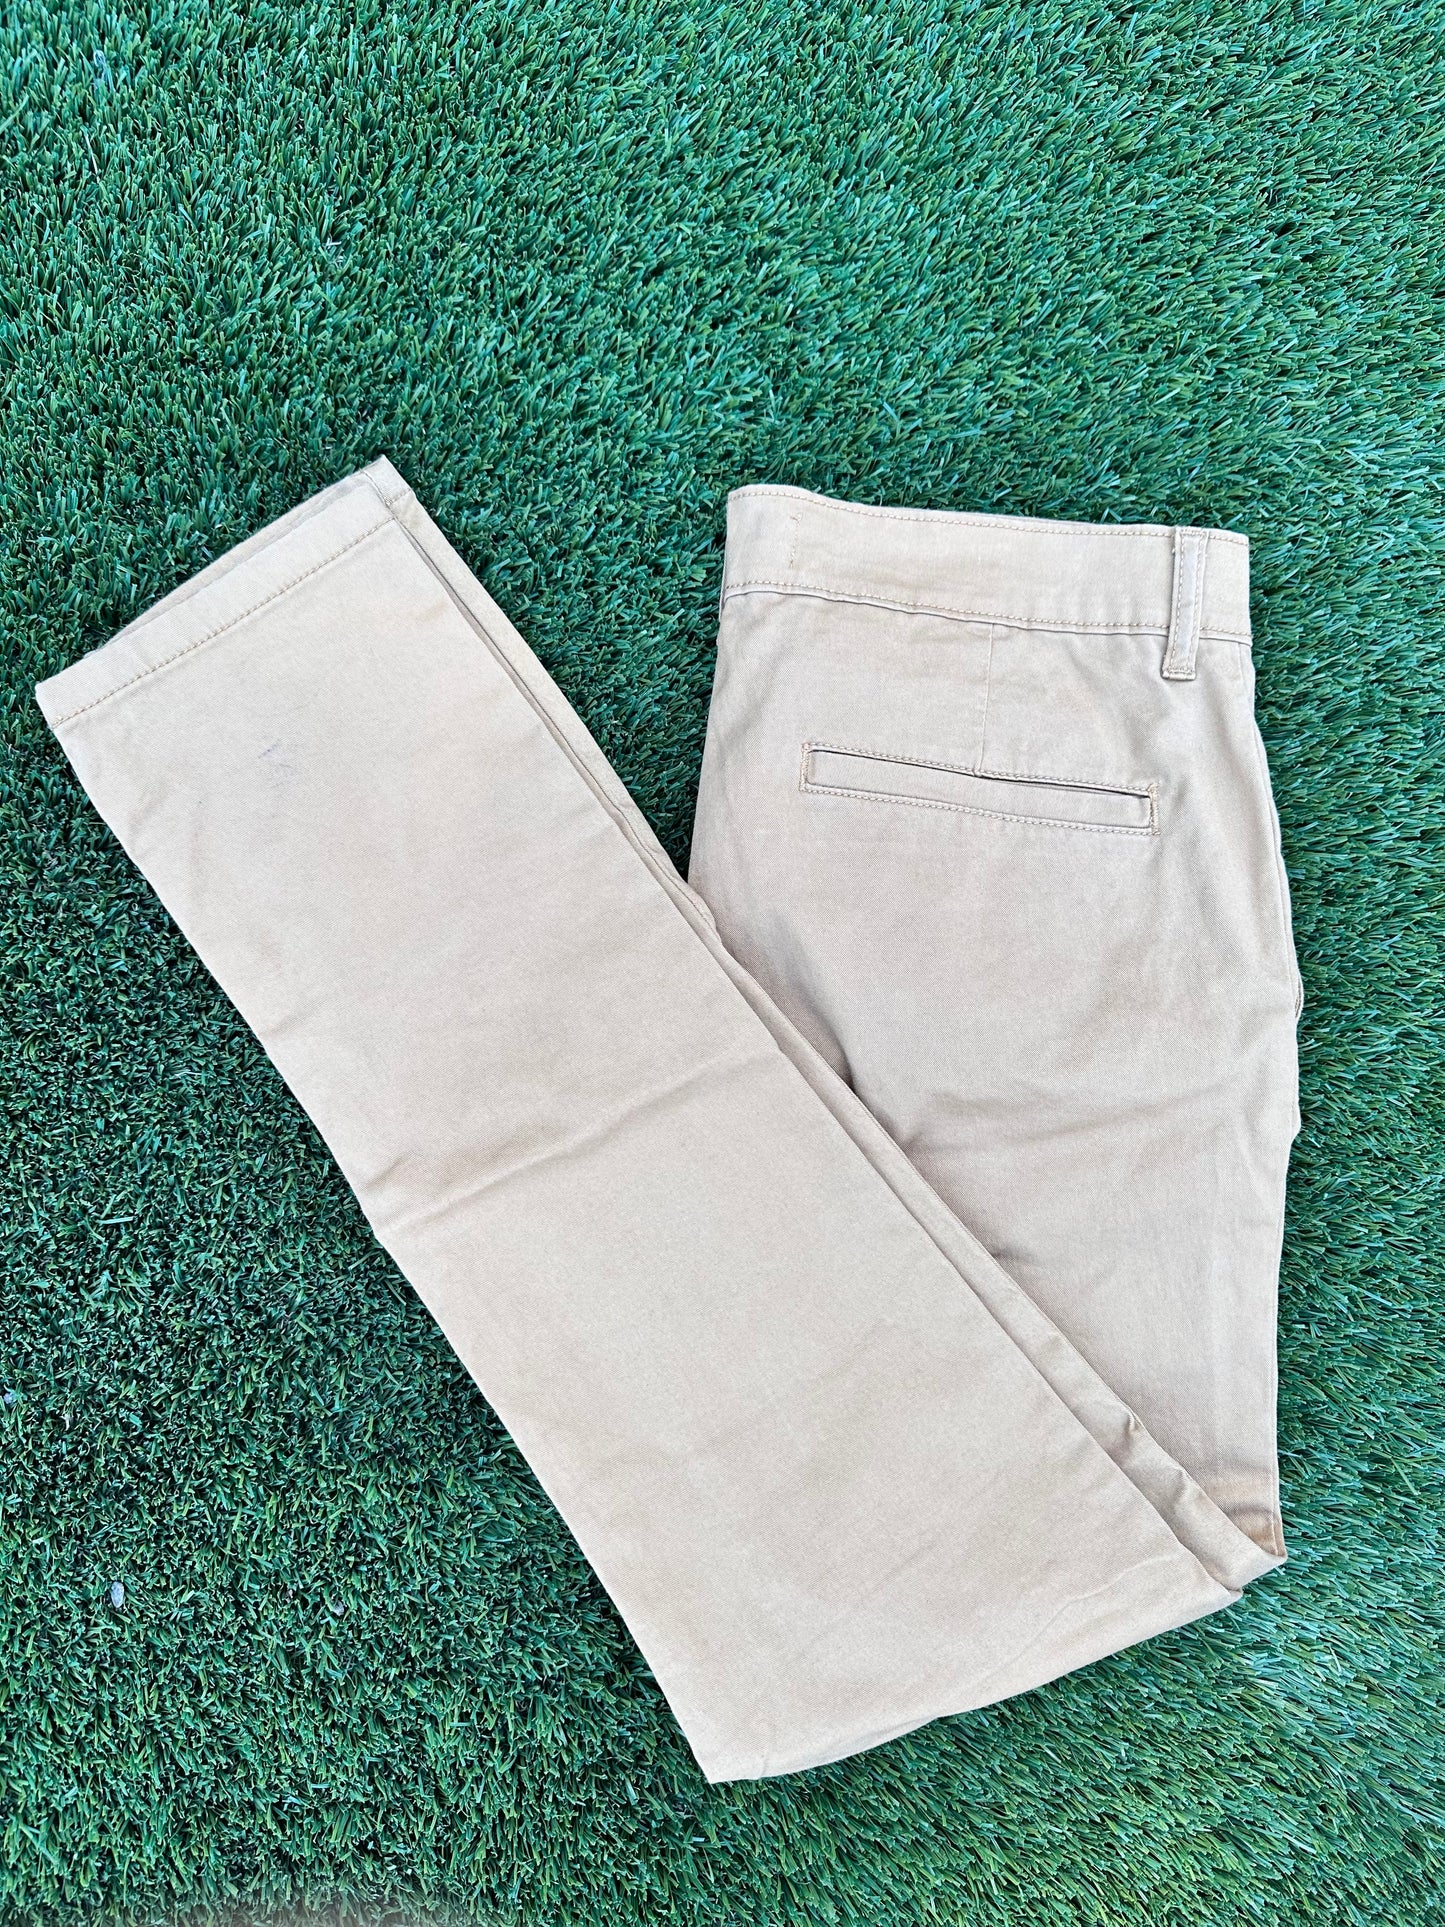 BONES: Dr. Jack Hodgins' TOP MAN Khaki Pants (30/30)